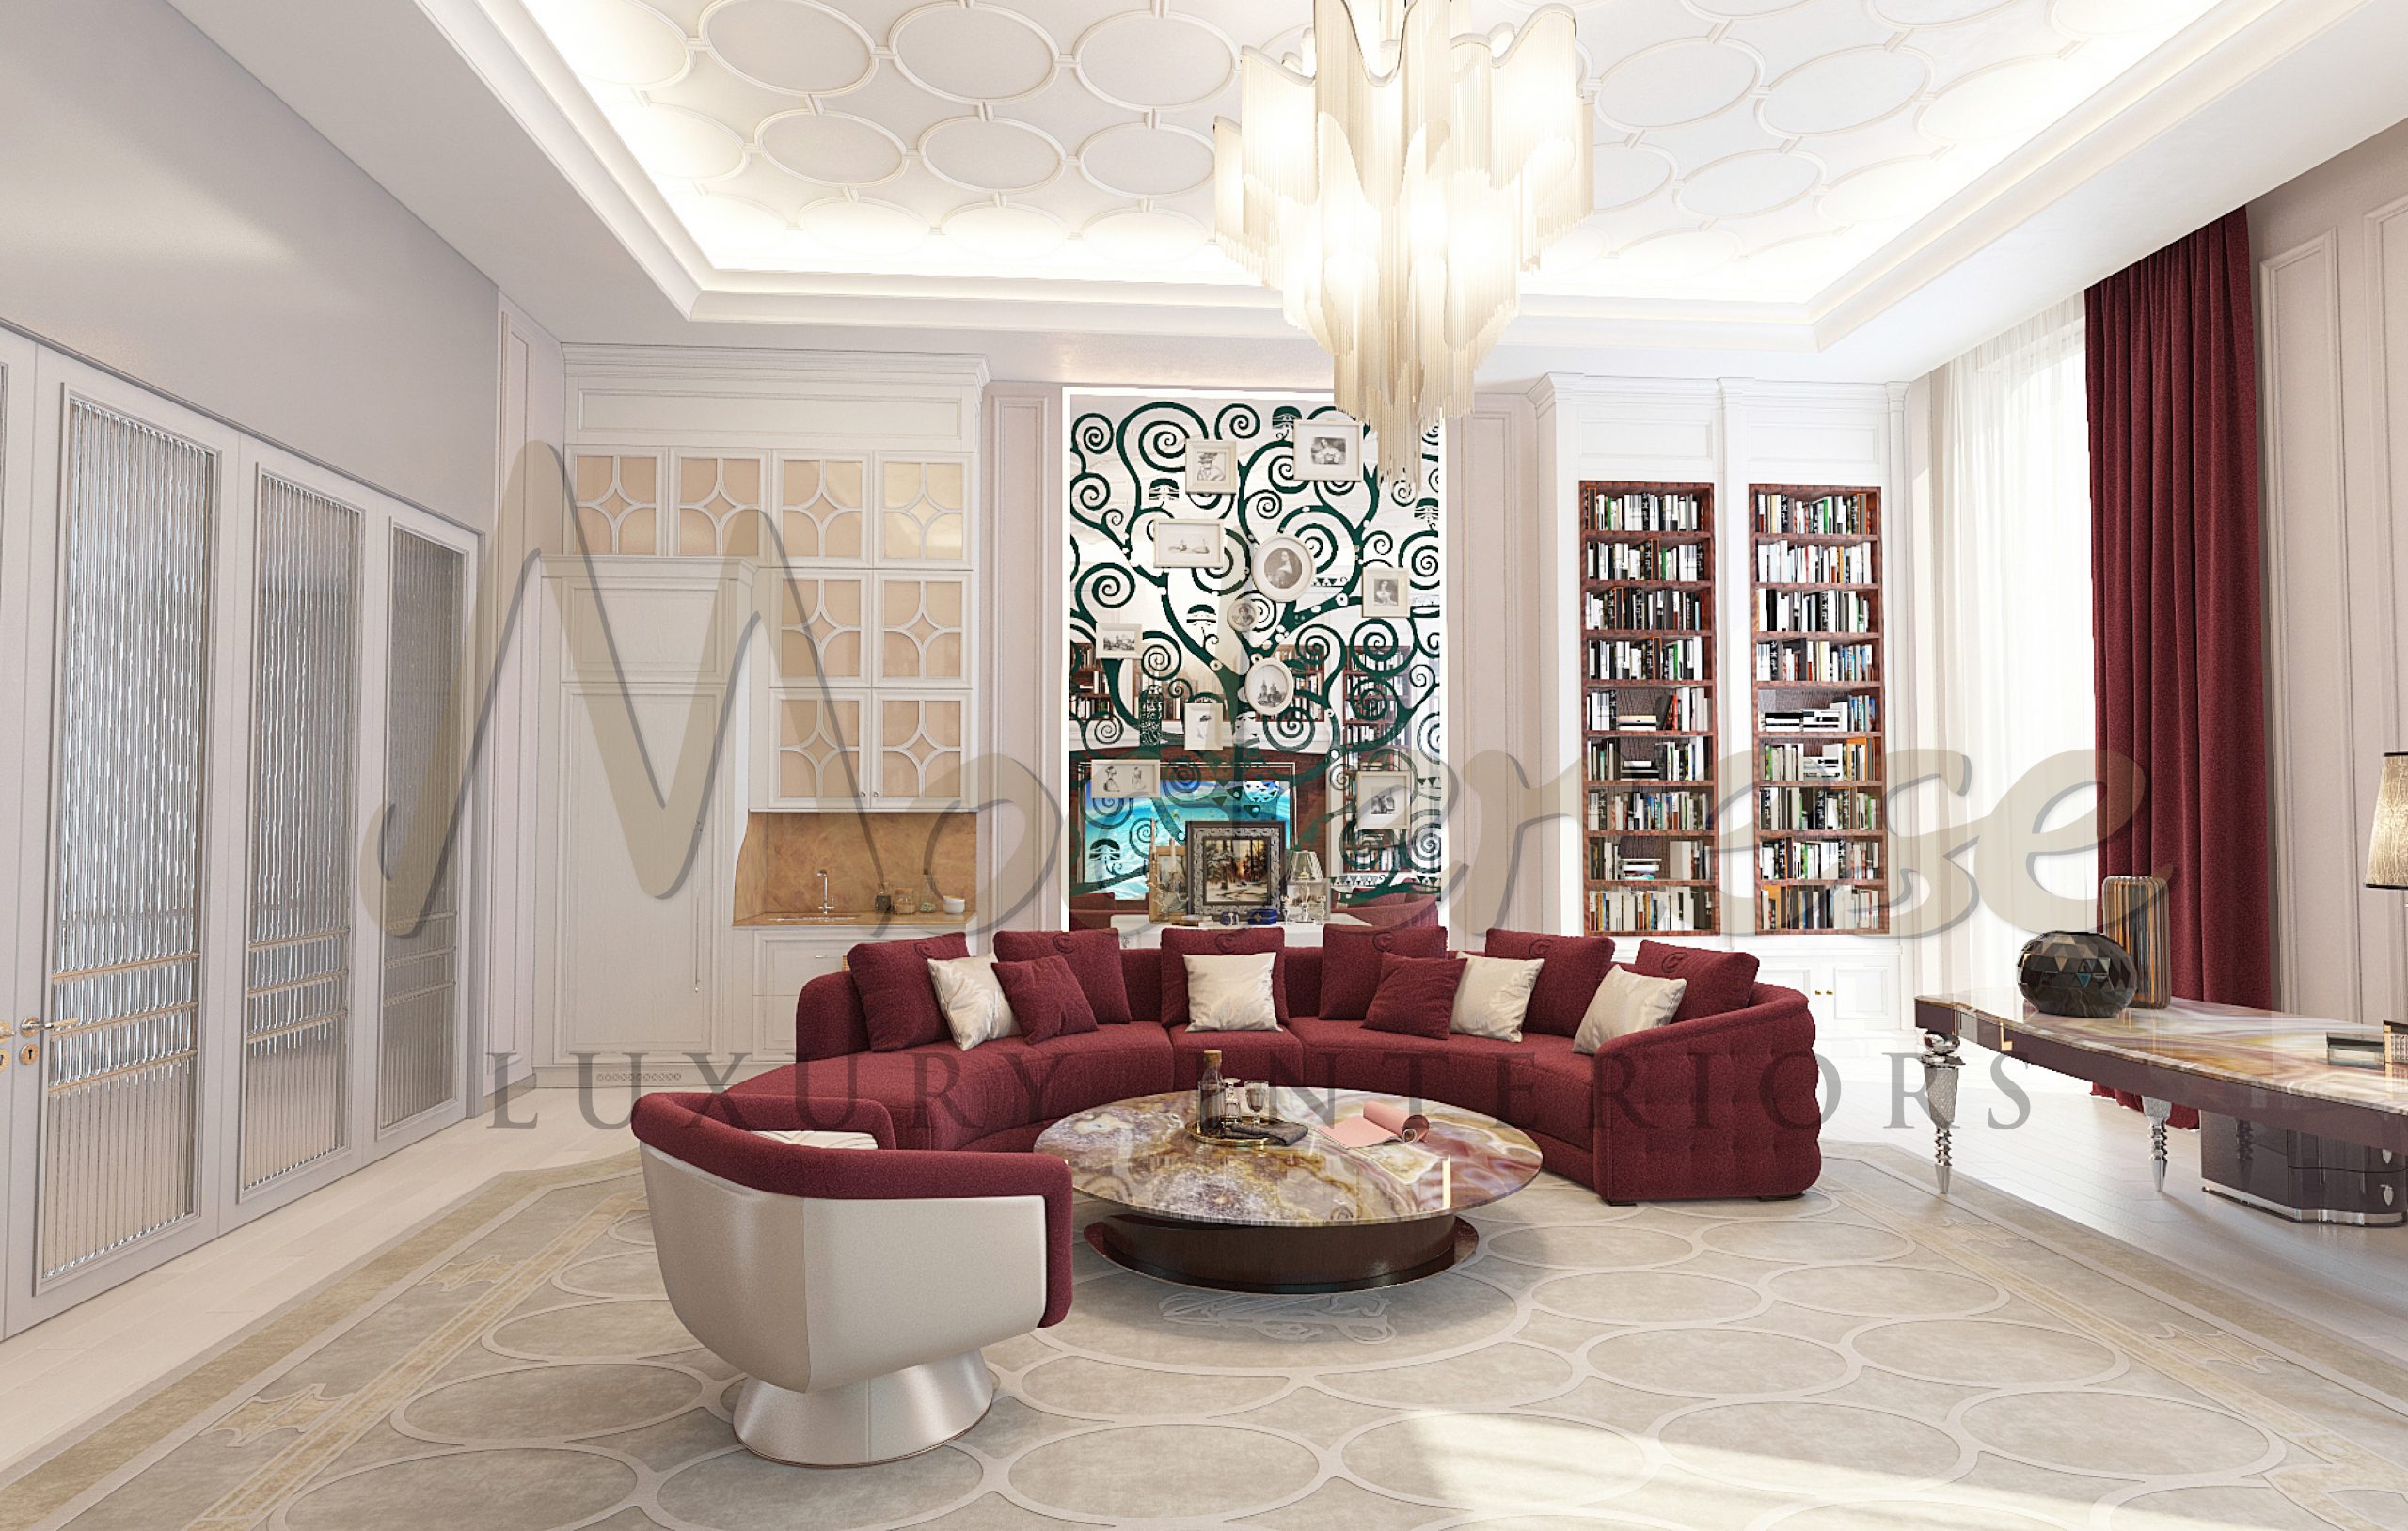 High-end quality,luxury furniture, living room design, top quality handmade interiors, artisanal made in Italy furniture production, modern living room design. Turnkey Interior Design Project.